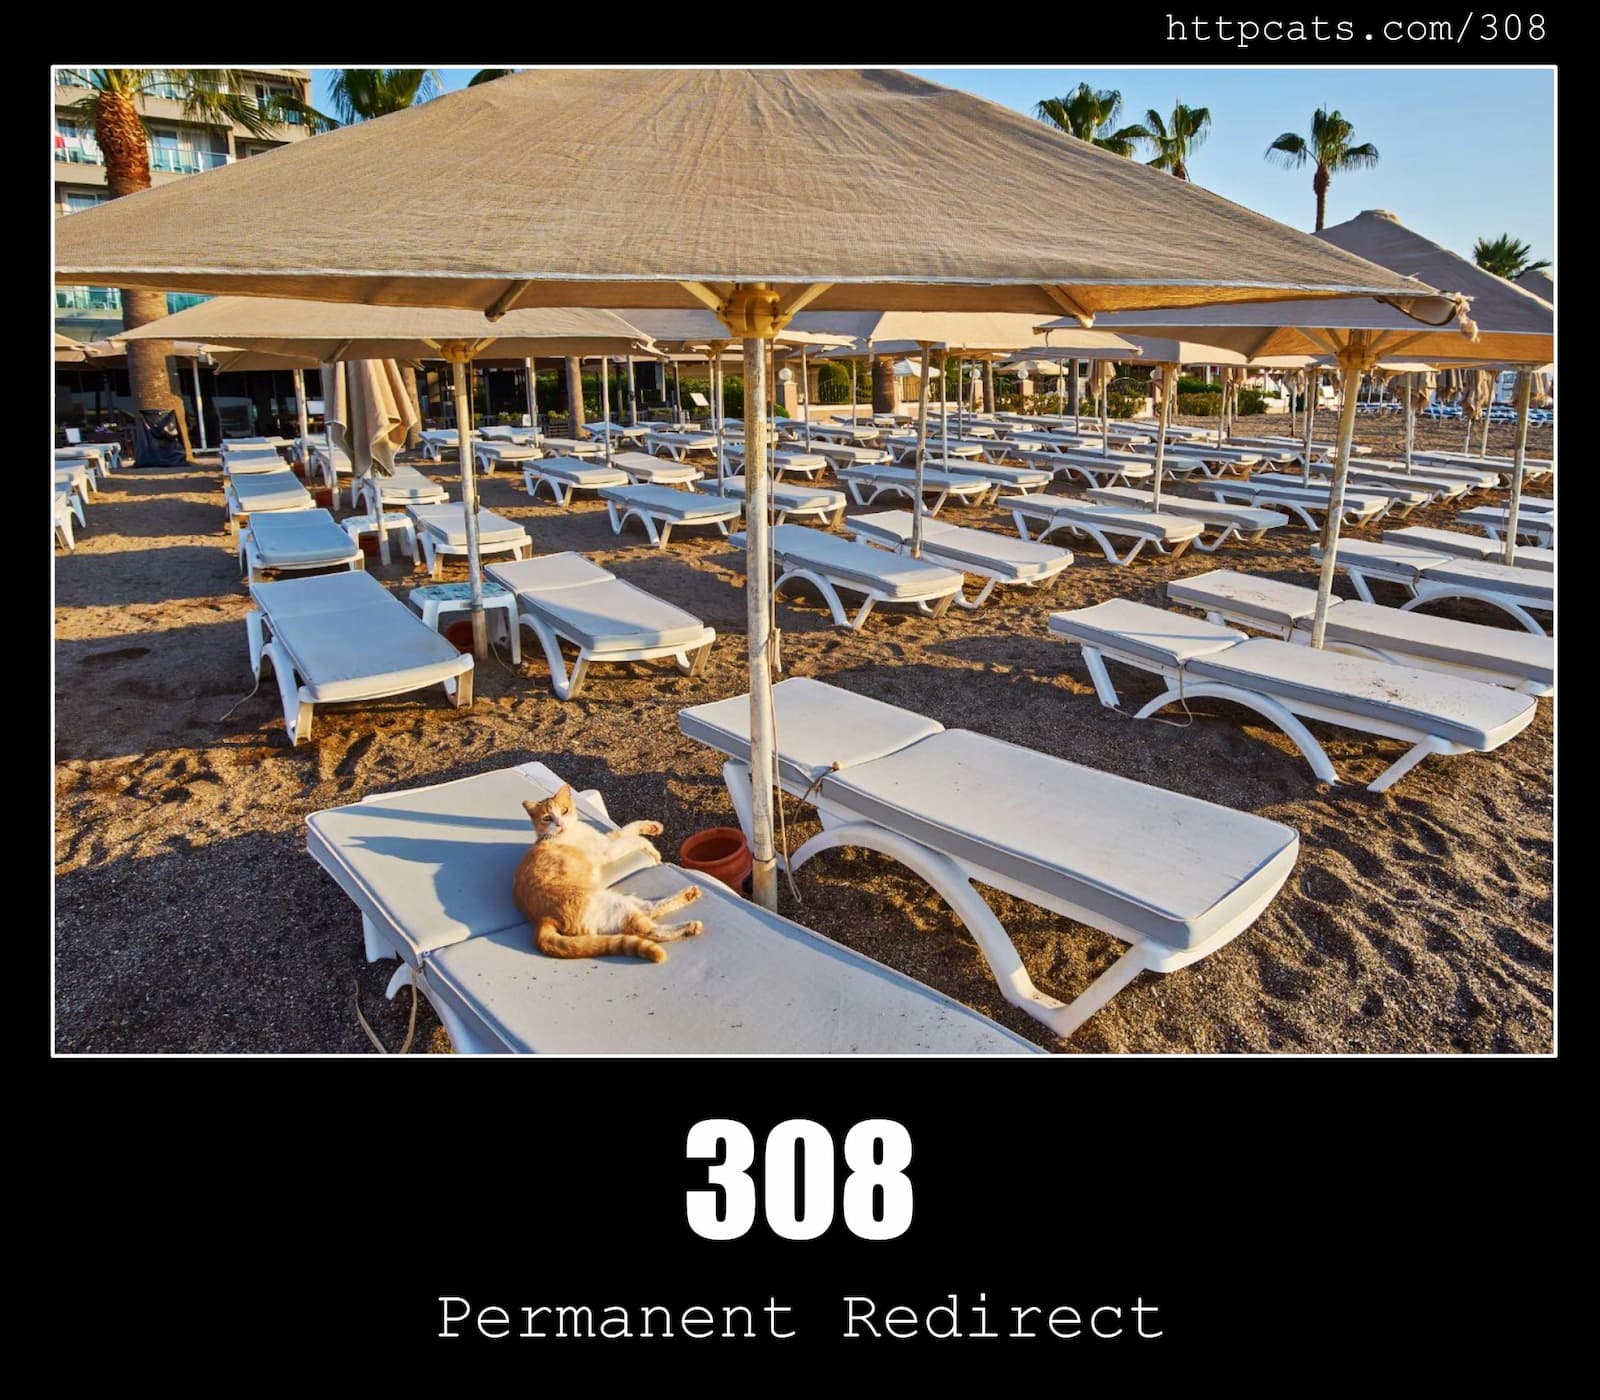 HTTP Status Code 308 Permanent Redirect & Cats